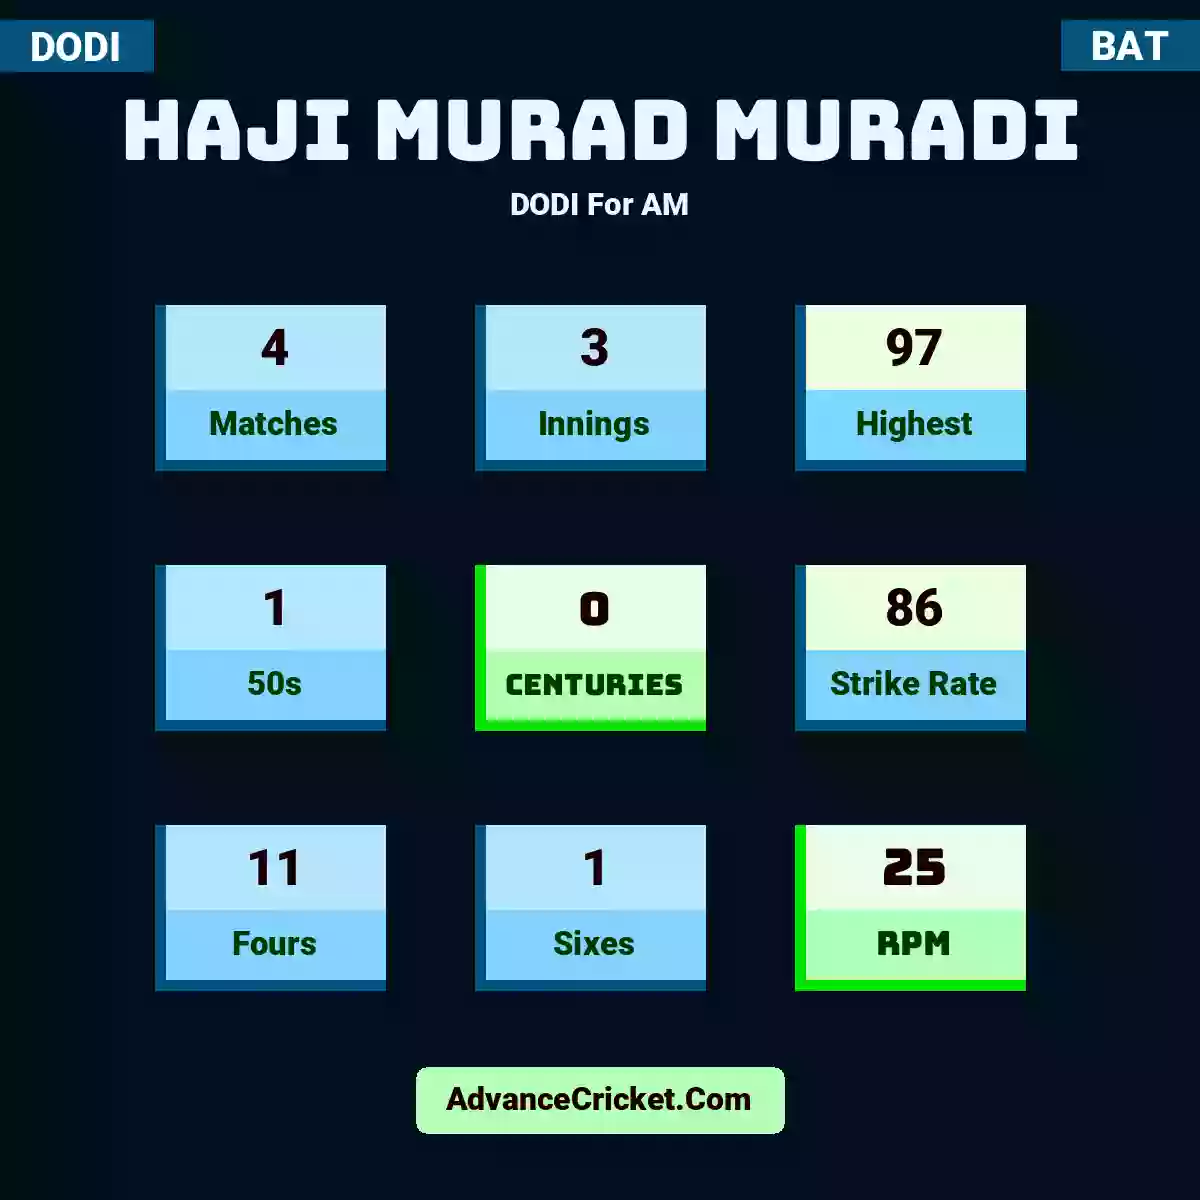 Haji Murad Muradi DODI  For AM, Haji Murad Muradi played 4 matches, scored 97 runs as highest, 1 half-centuries, and 0 centuries, with a strike rate of 86. H.Murad.Muradi hit 11 fours and 1 sixes, with an RPM of 25.